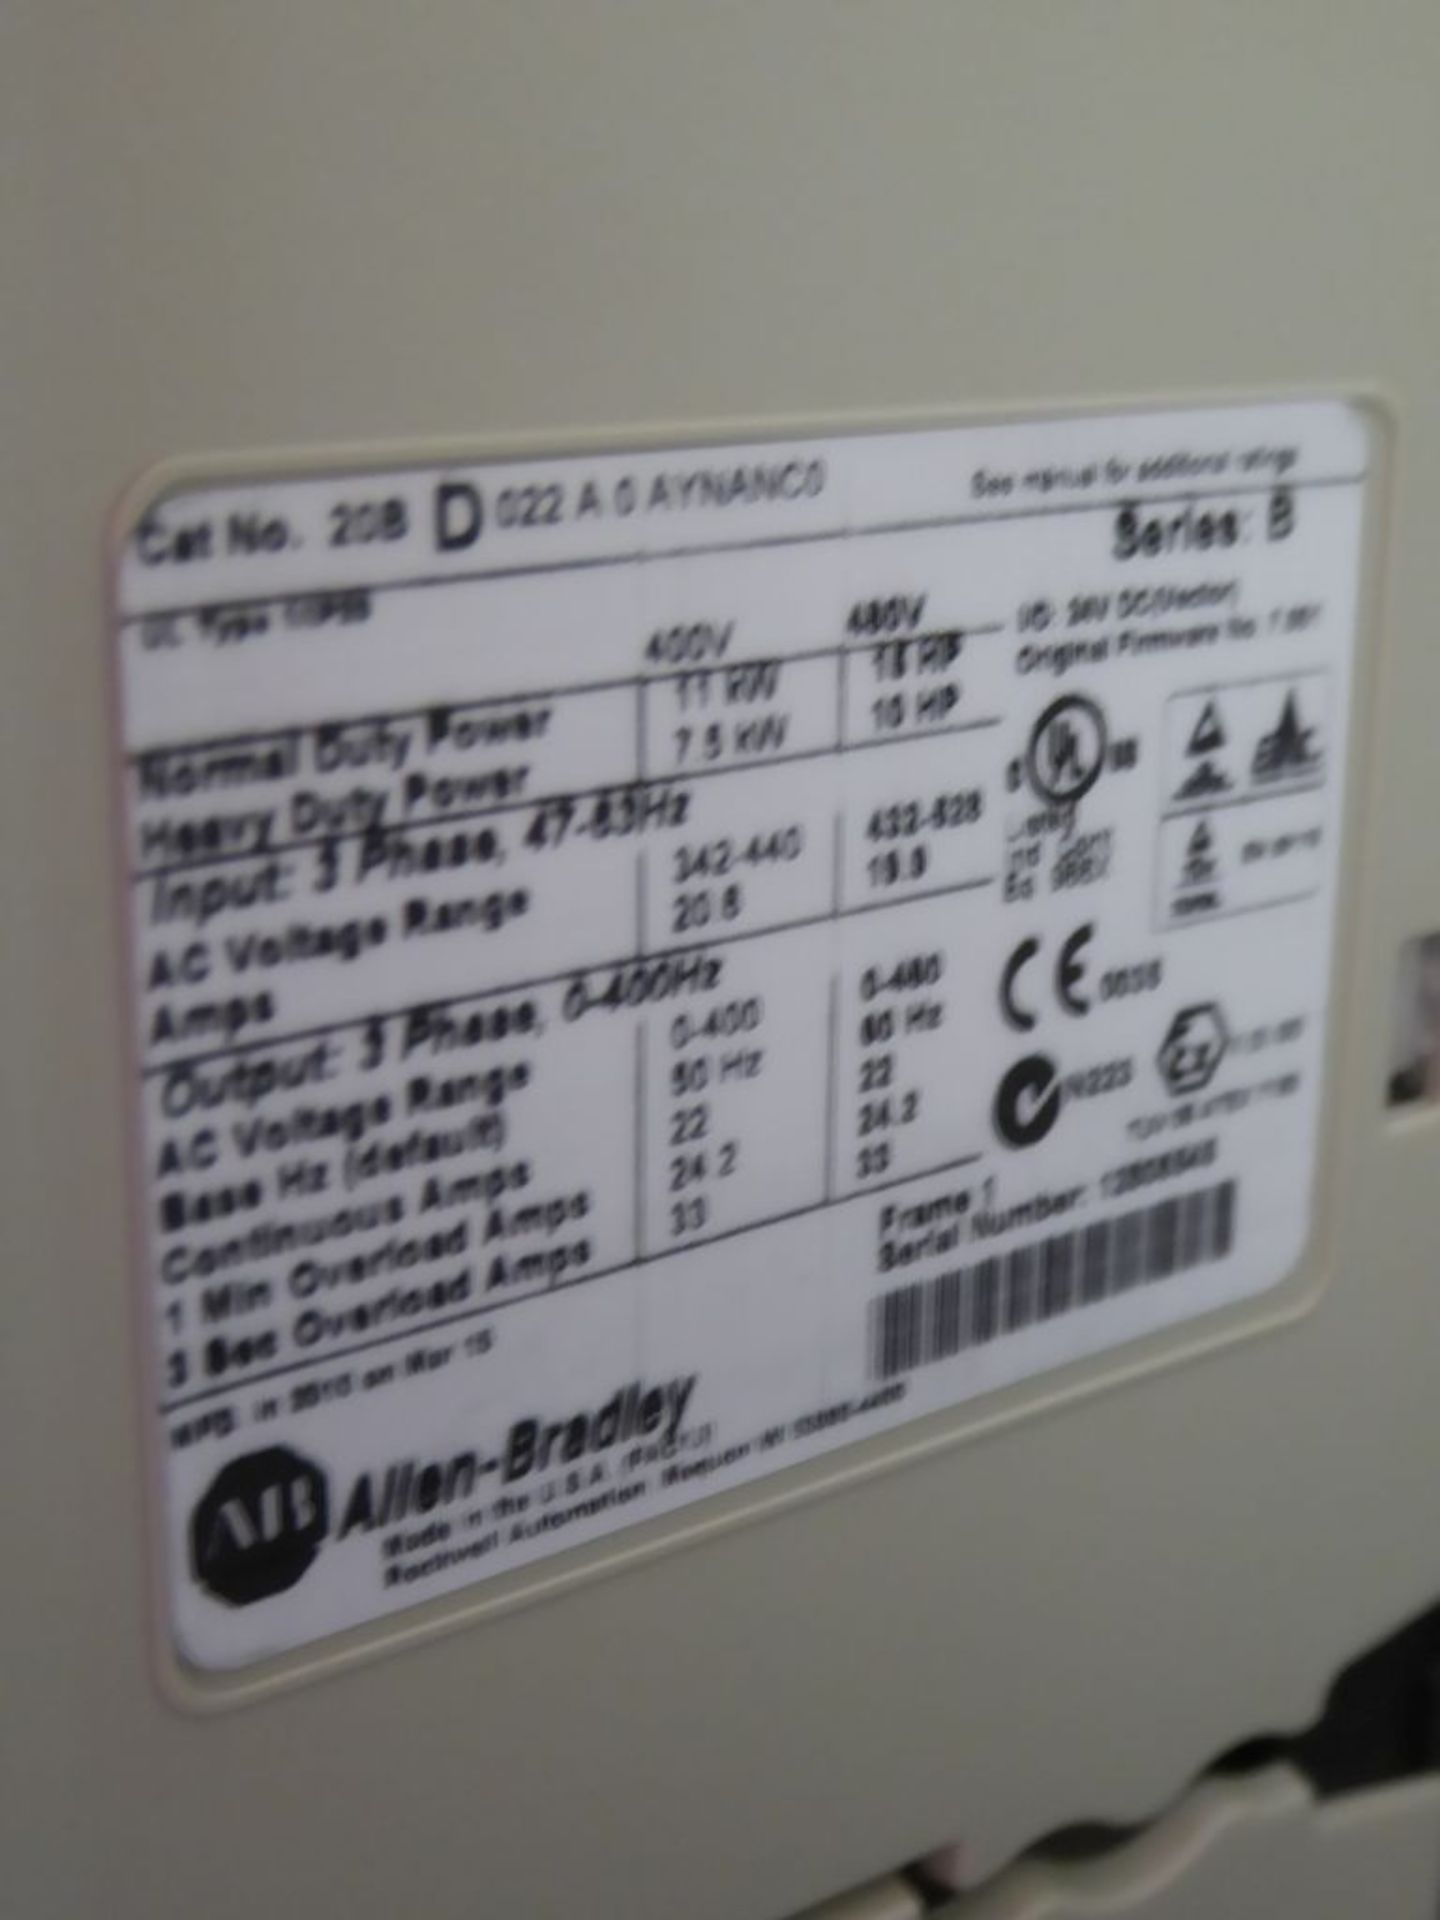 Control Panel w/(2) Allen Bradley Powerflex 700 Drives - Image 9 of 23